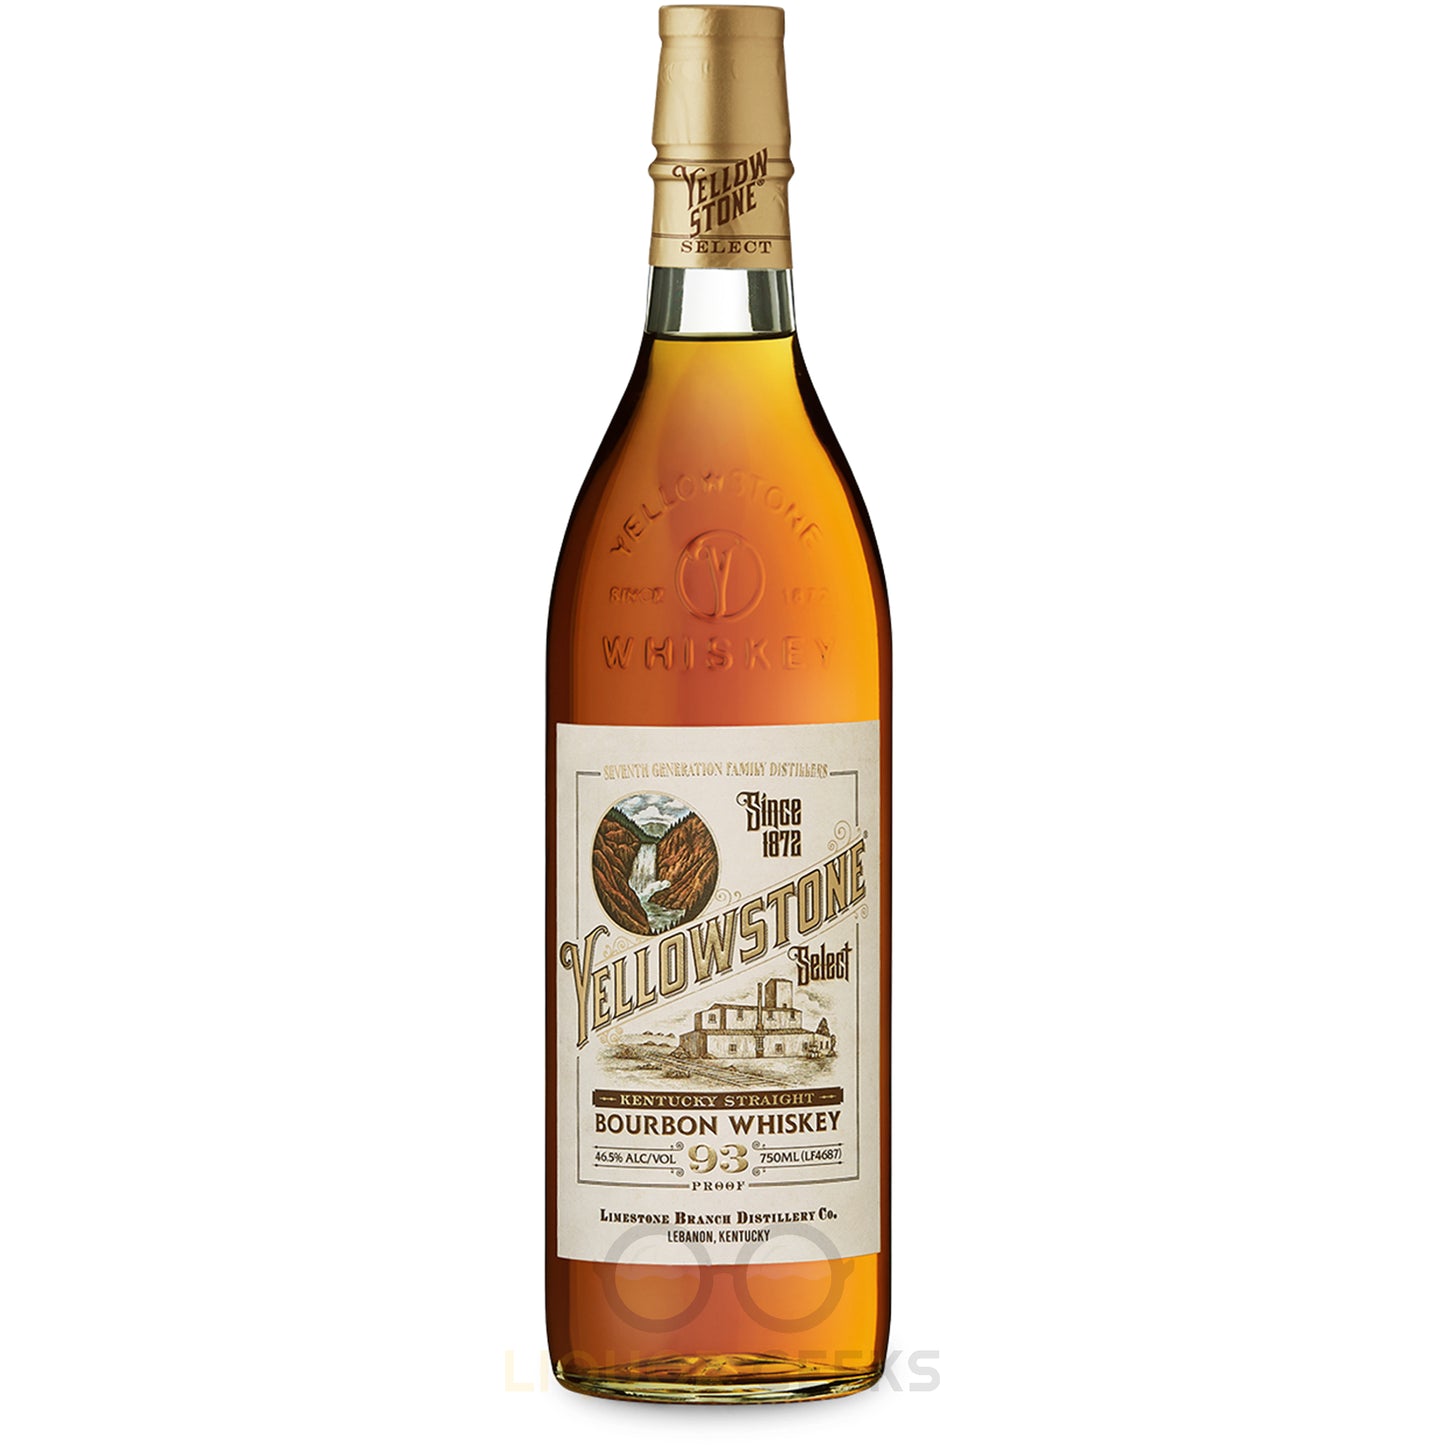 Yellowstone Select Bourbon - Liquor Geeks